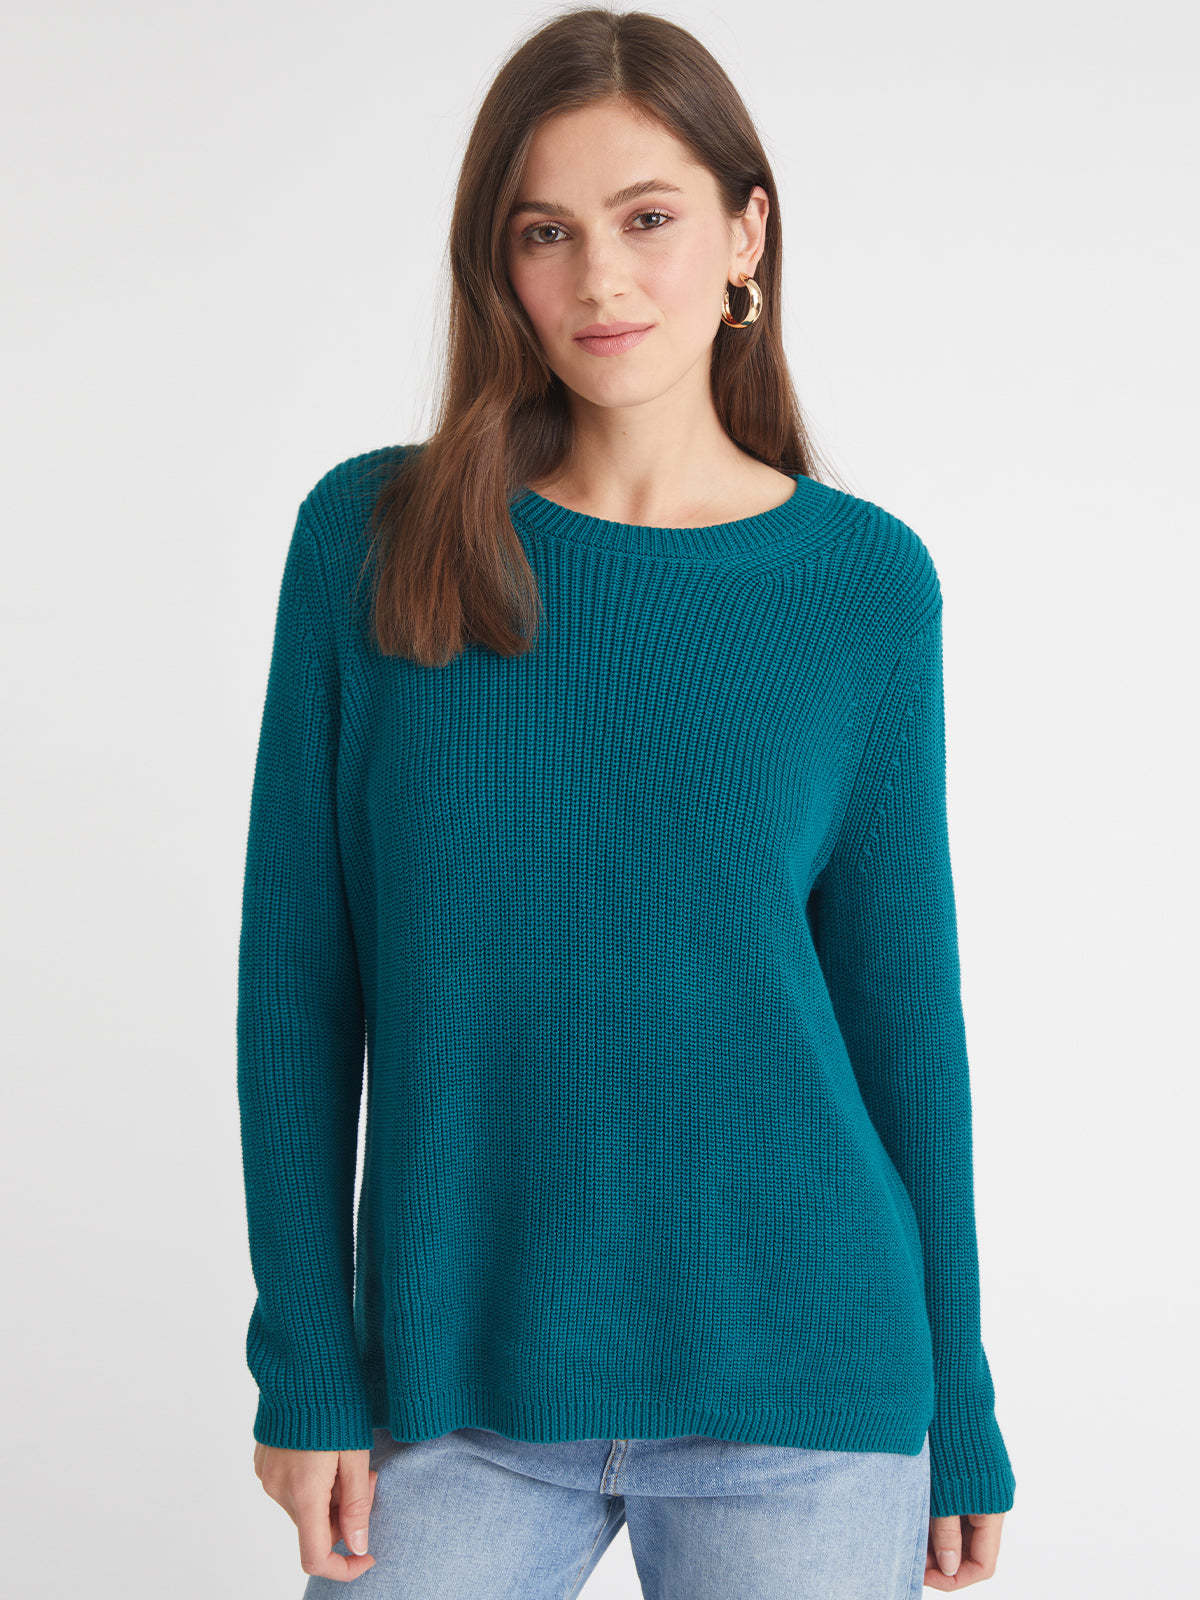 525 America Emma: Crewneck Shaker Stitch Sweater